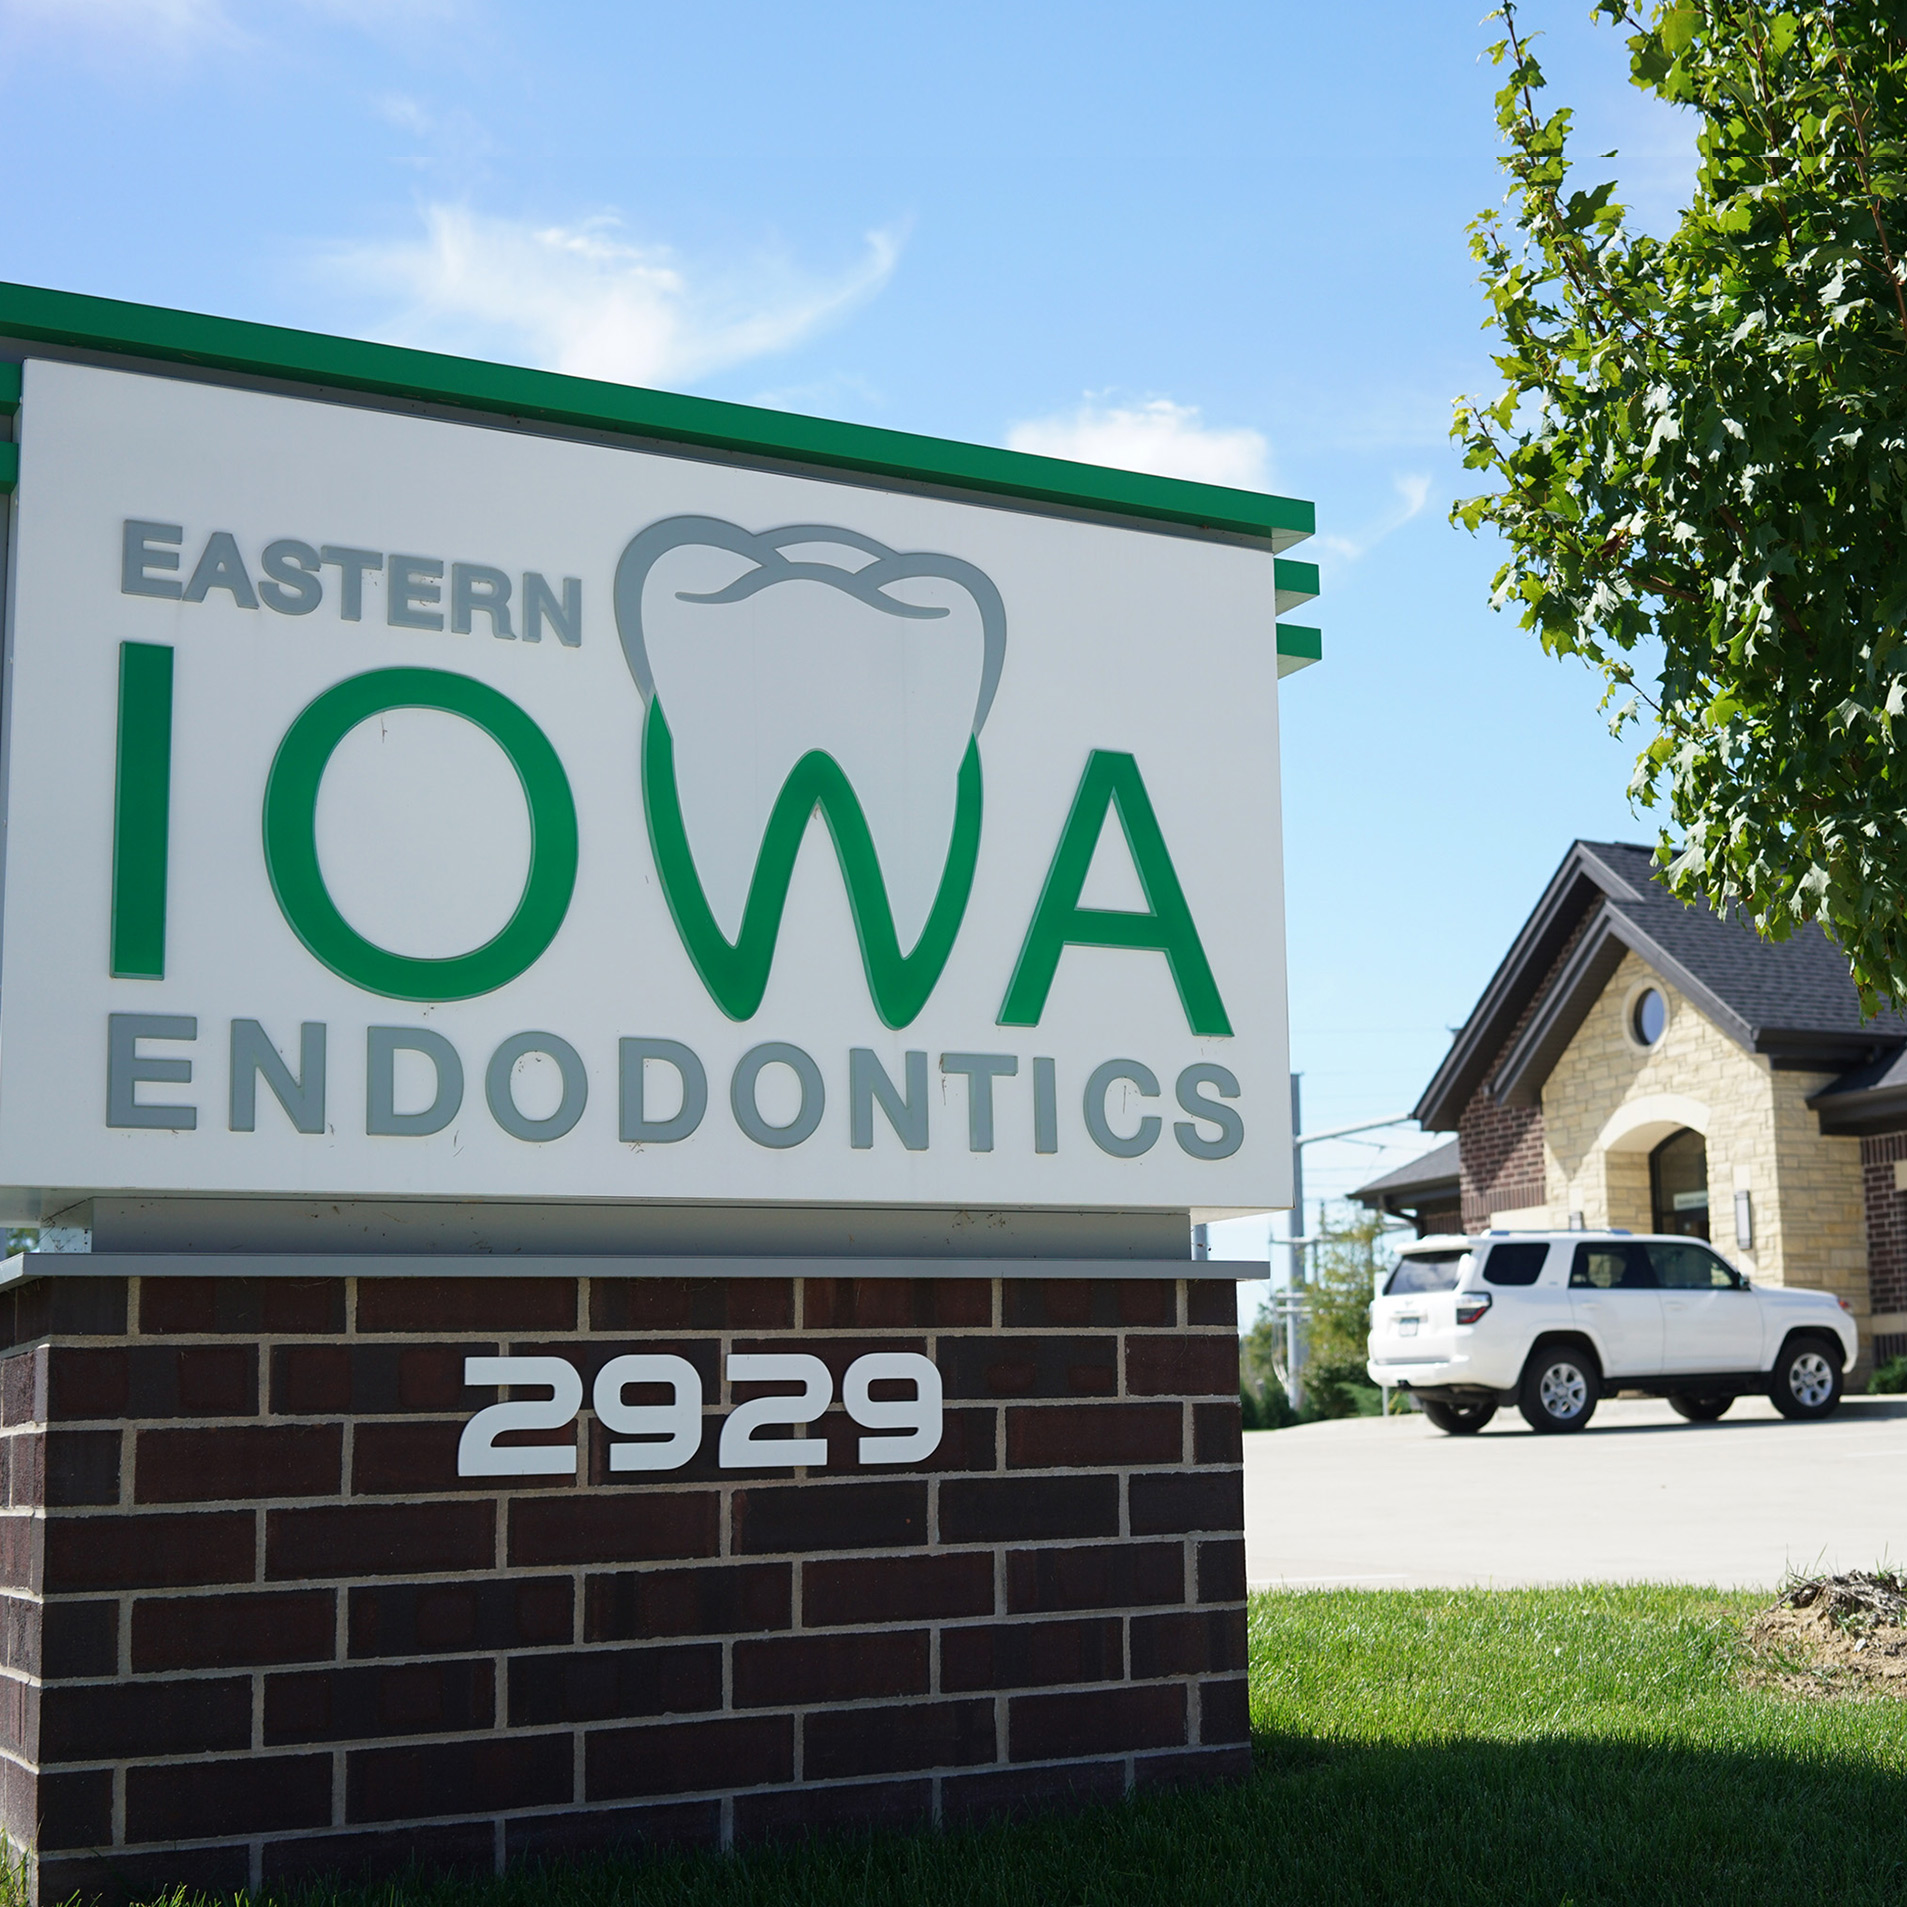 Eastern Iowa Endodontics Office